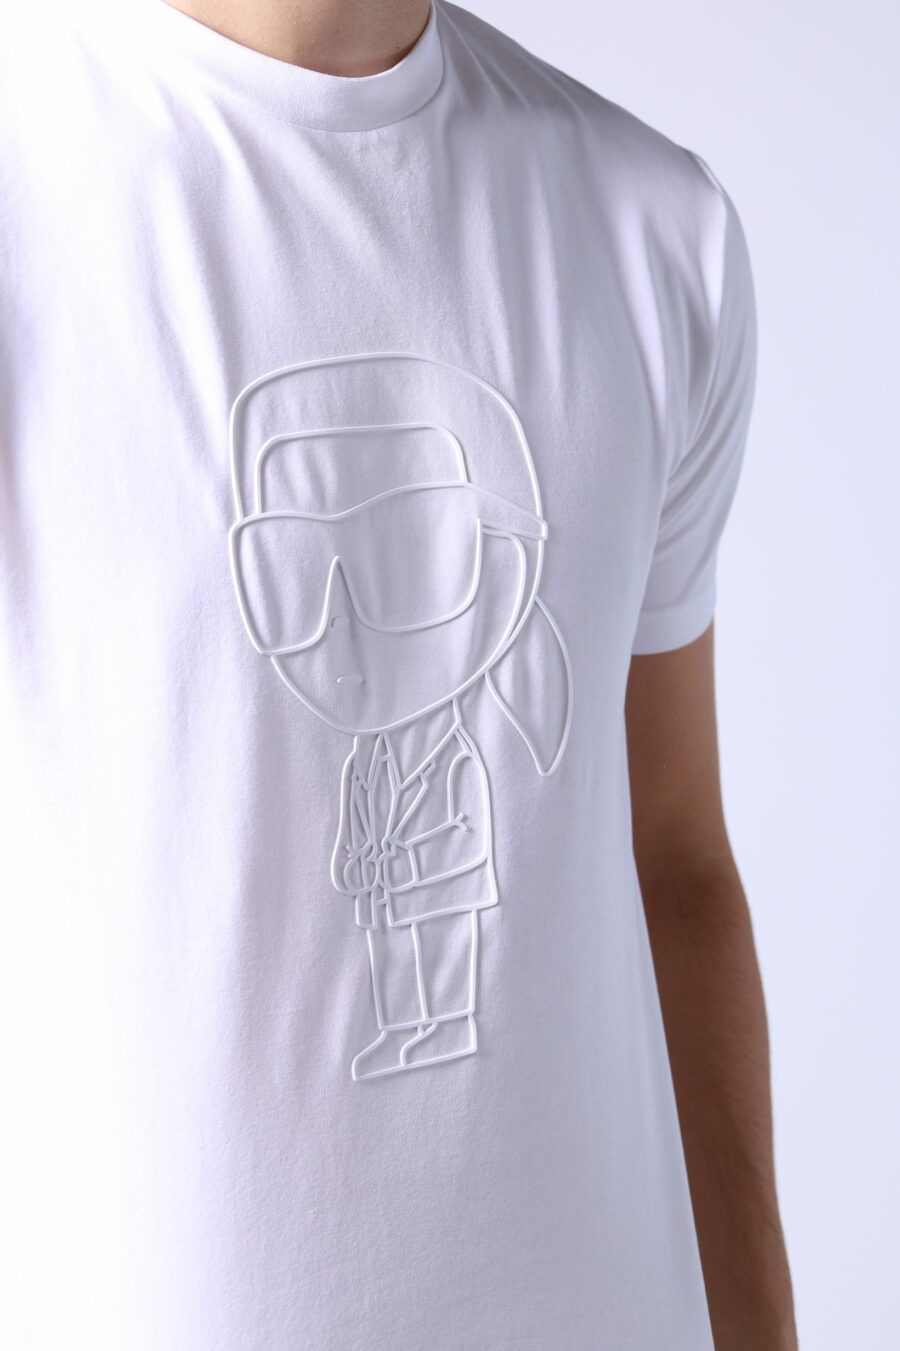 White T-shirt with monochromatic rubber maxi logo - Untitled Catalog 05798